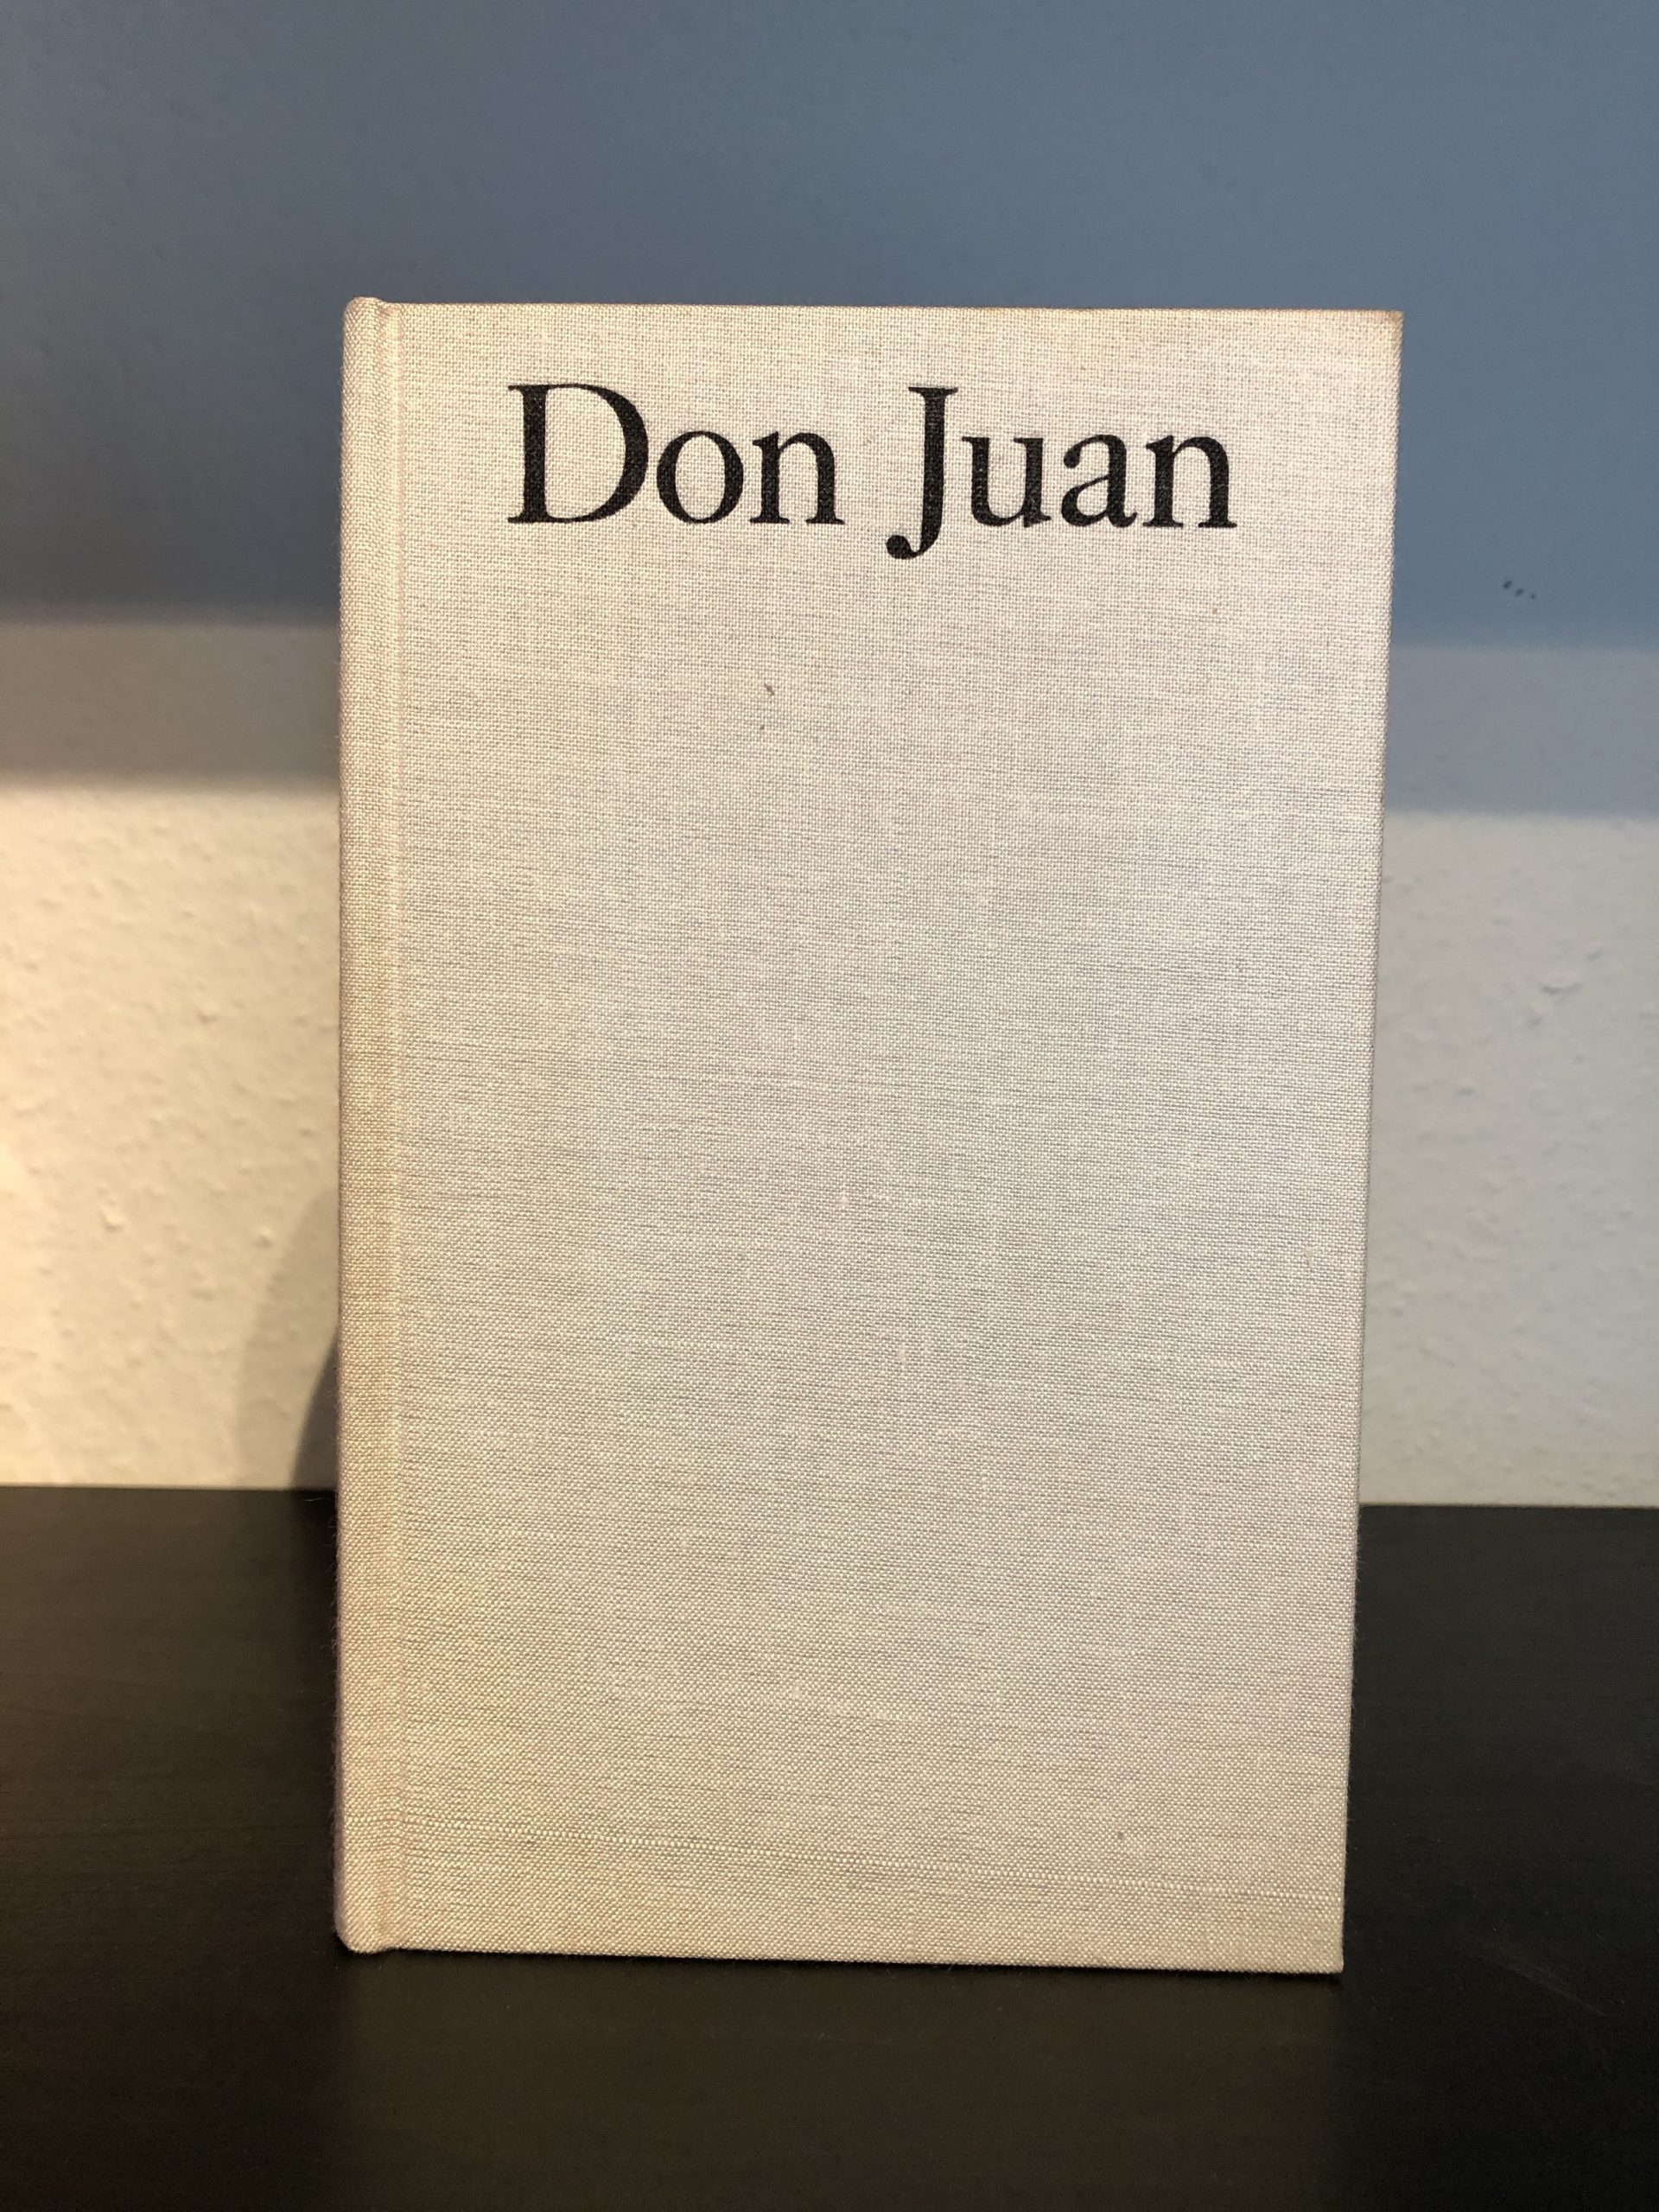 Don Juan - Josef Toman-image